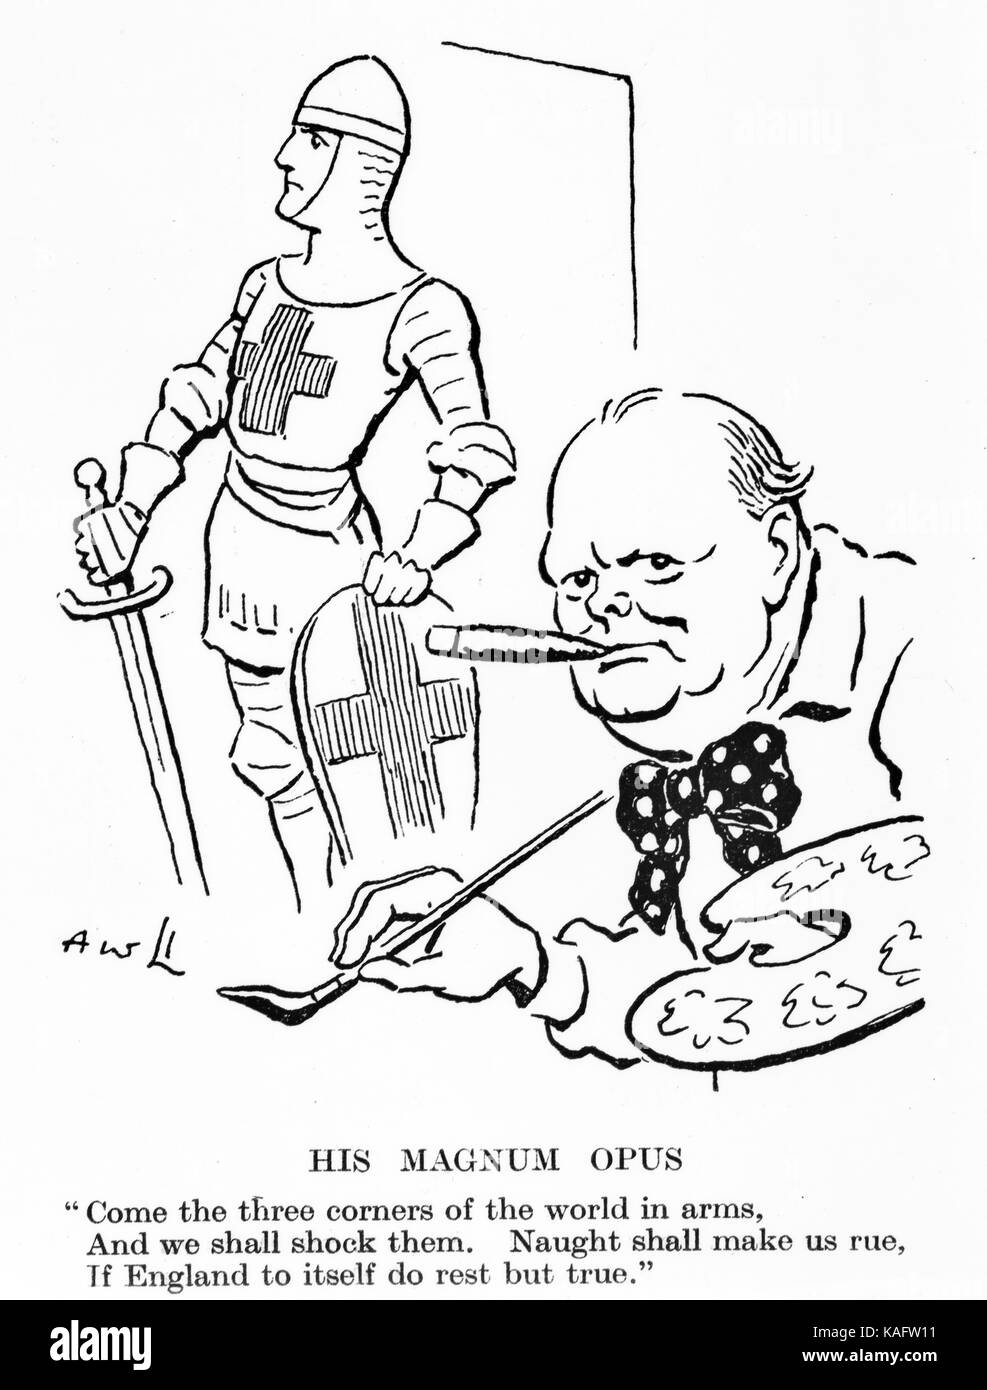 Churchill Cartoon Stockfoto